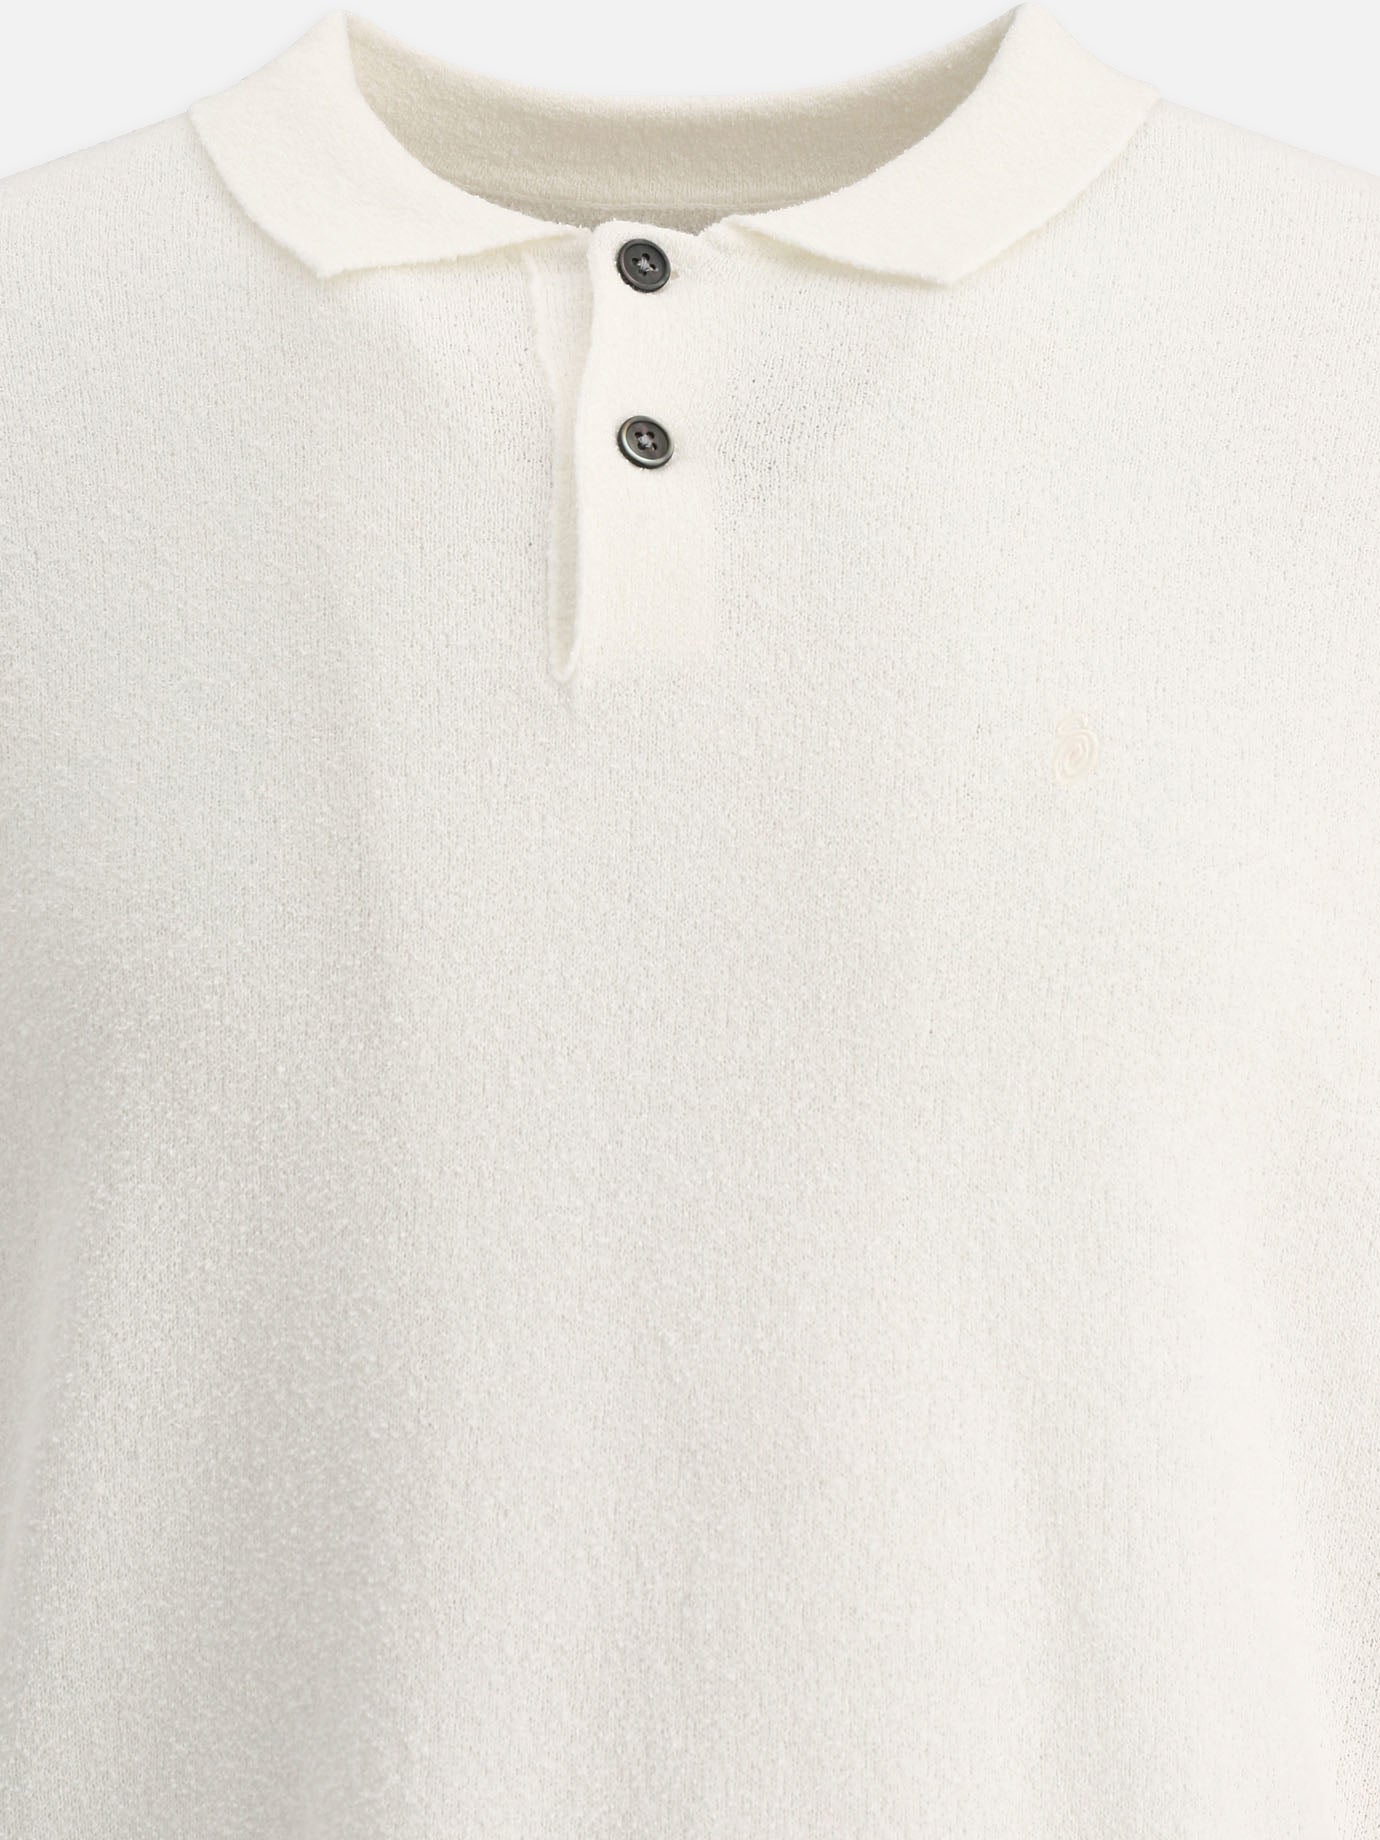 "Textured" polo shirt